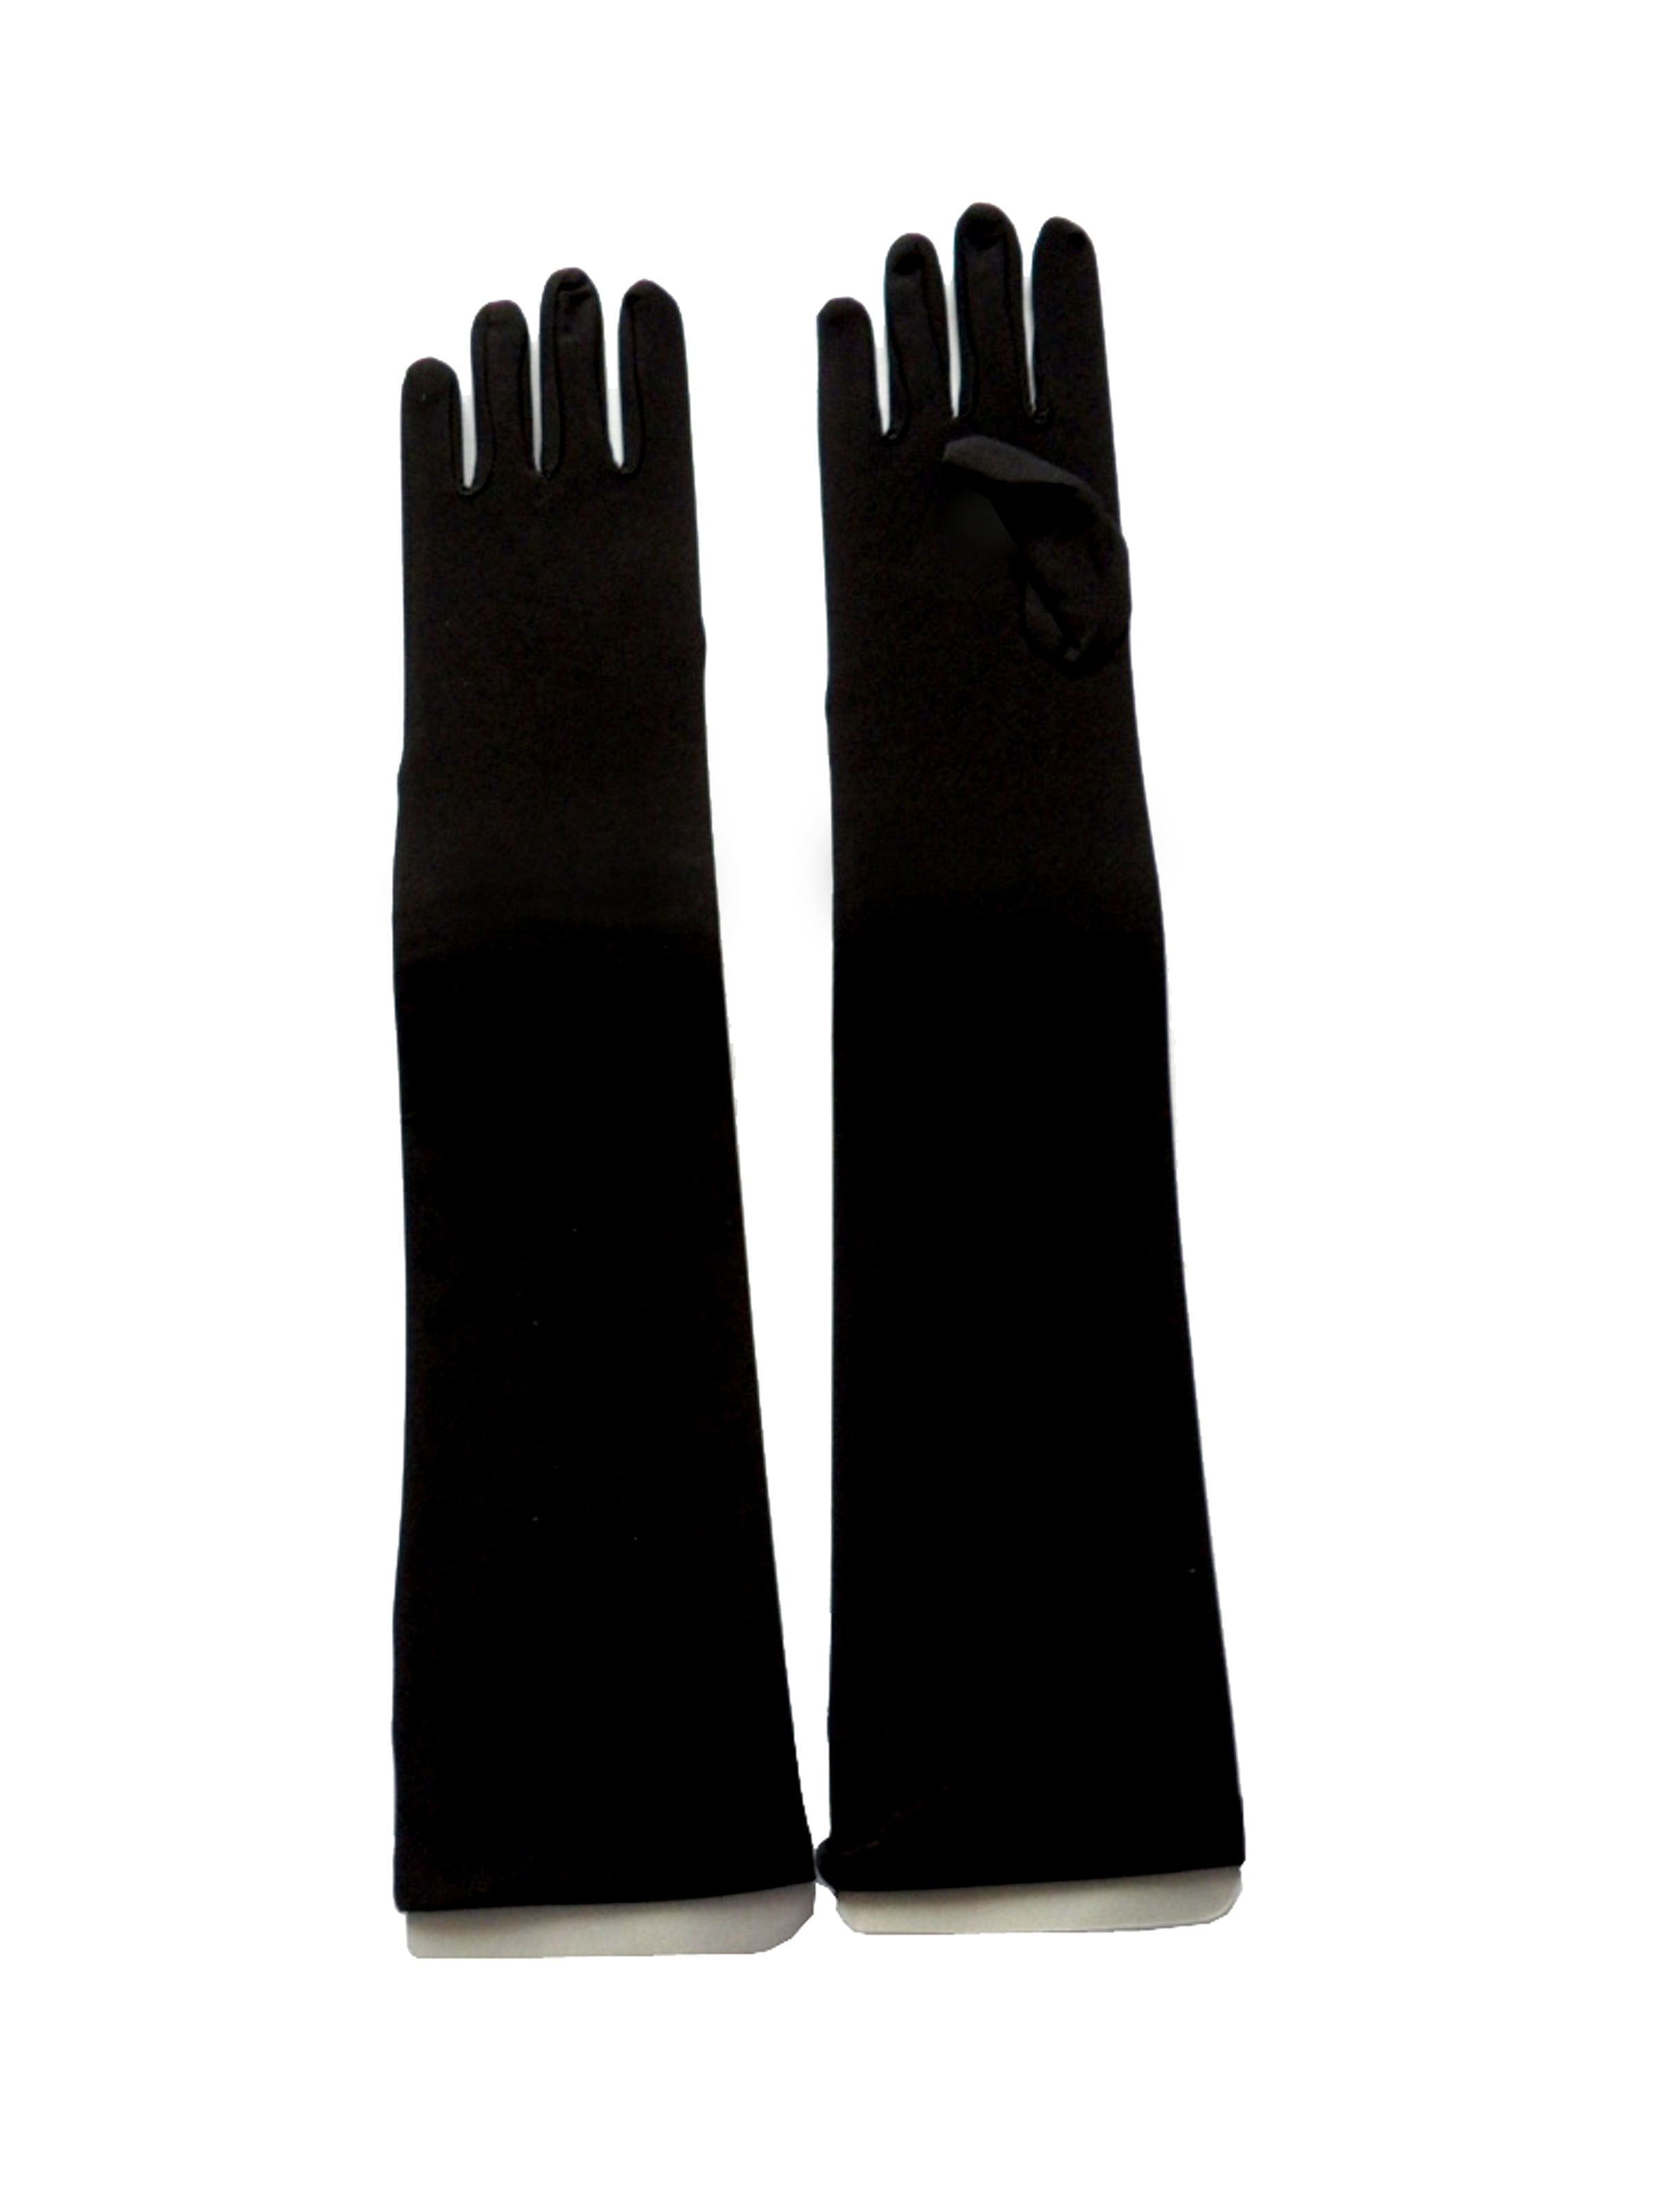 1080x1920 wallpaper | black hand gloves | Peakpx